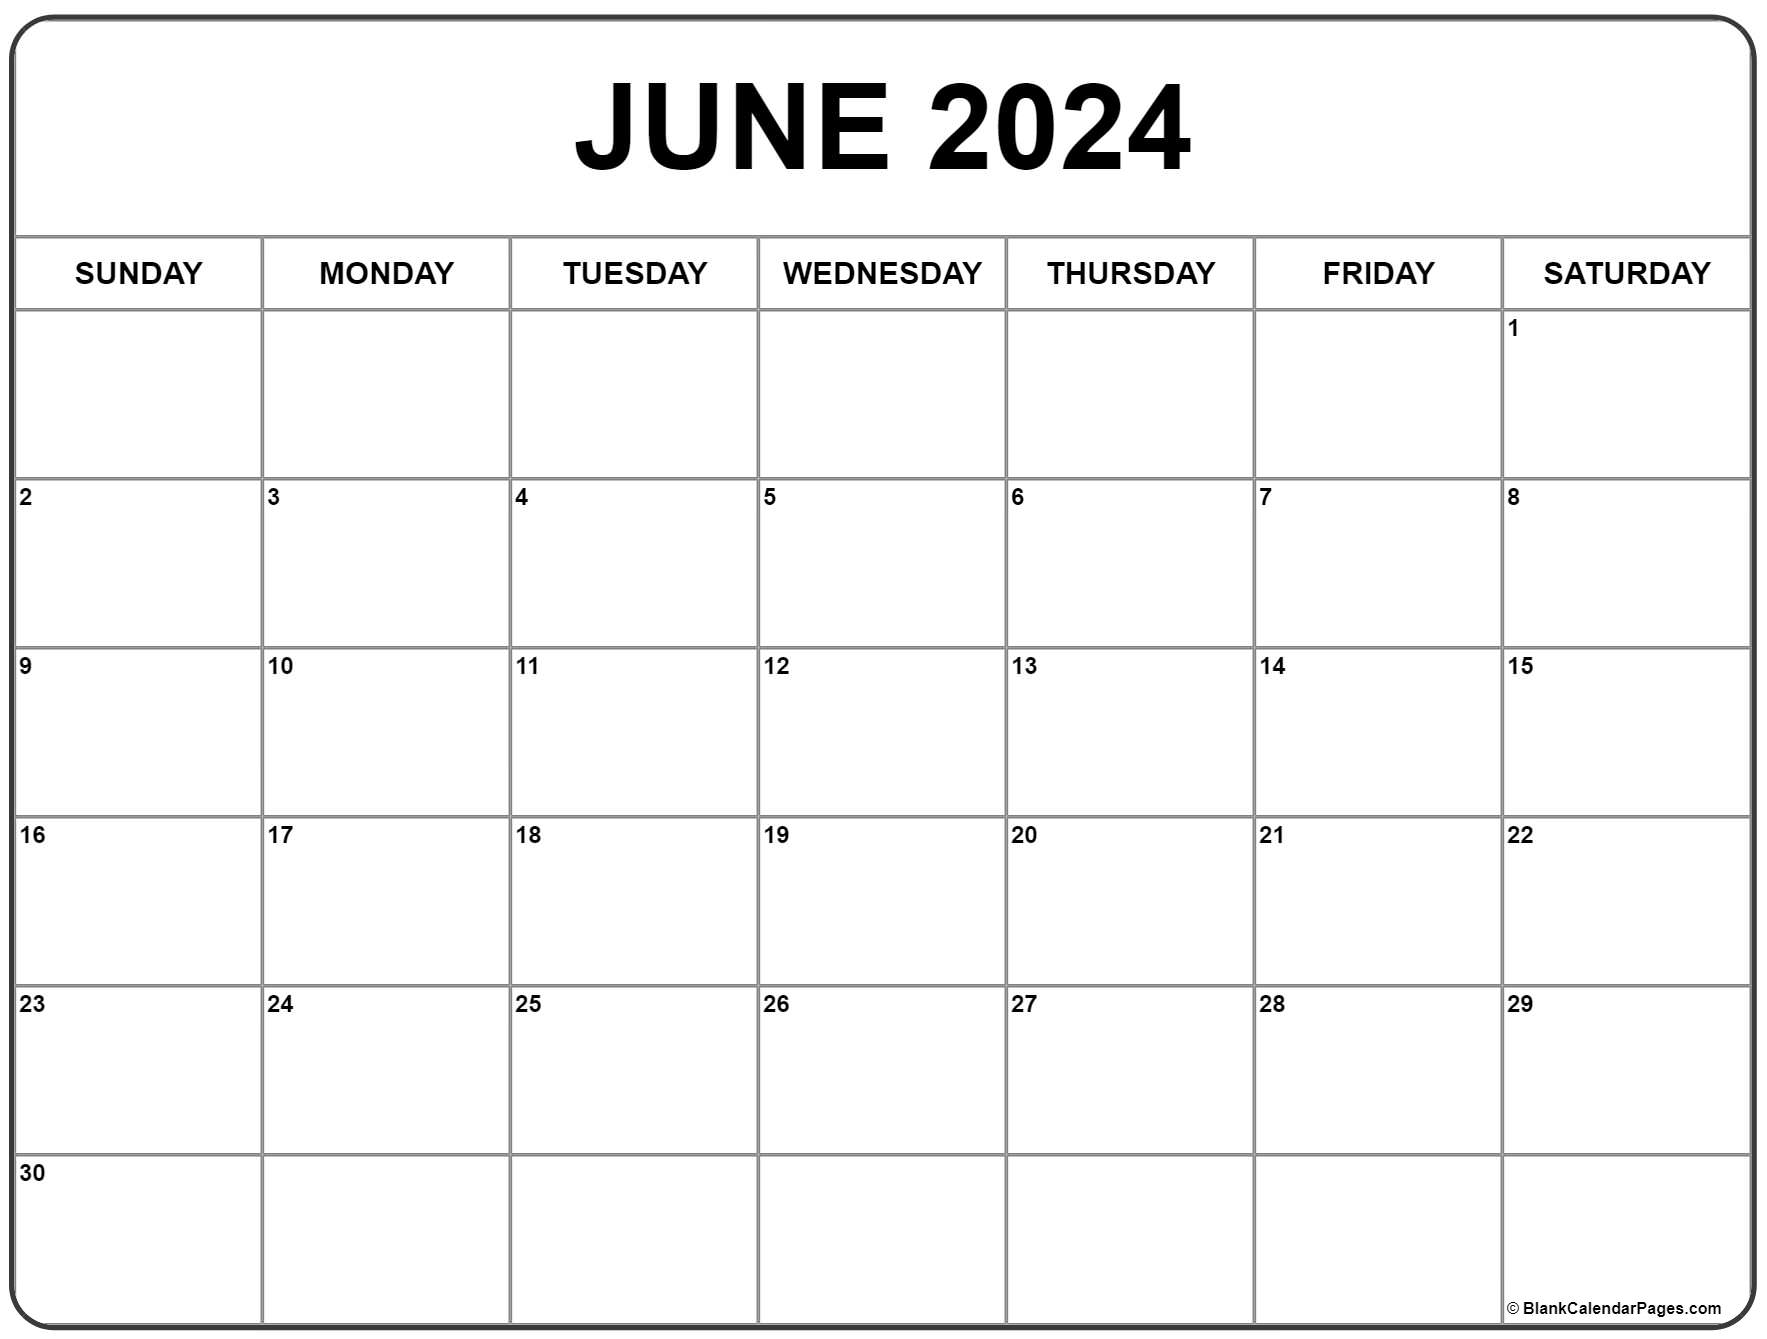 June 2024 Calendar | Free Printable Calendar for Free Printable Calendar 2024 June